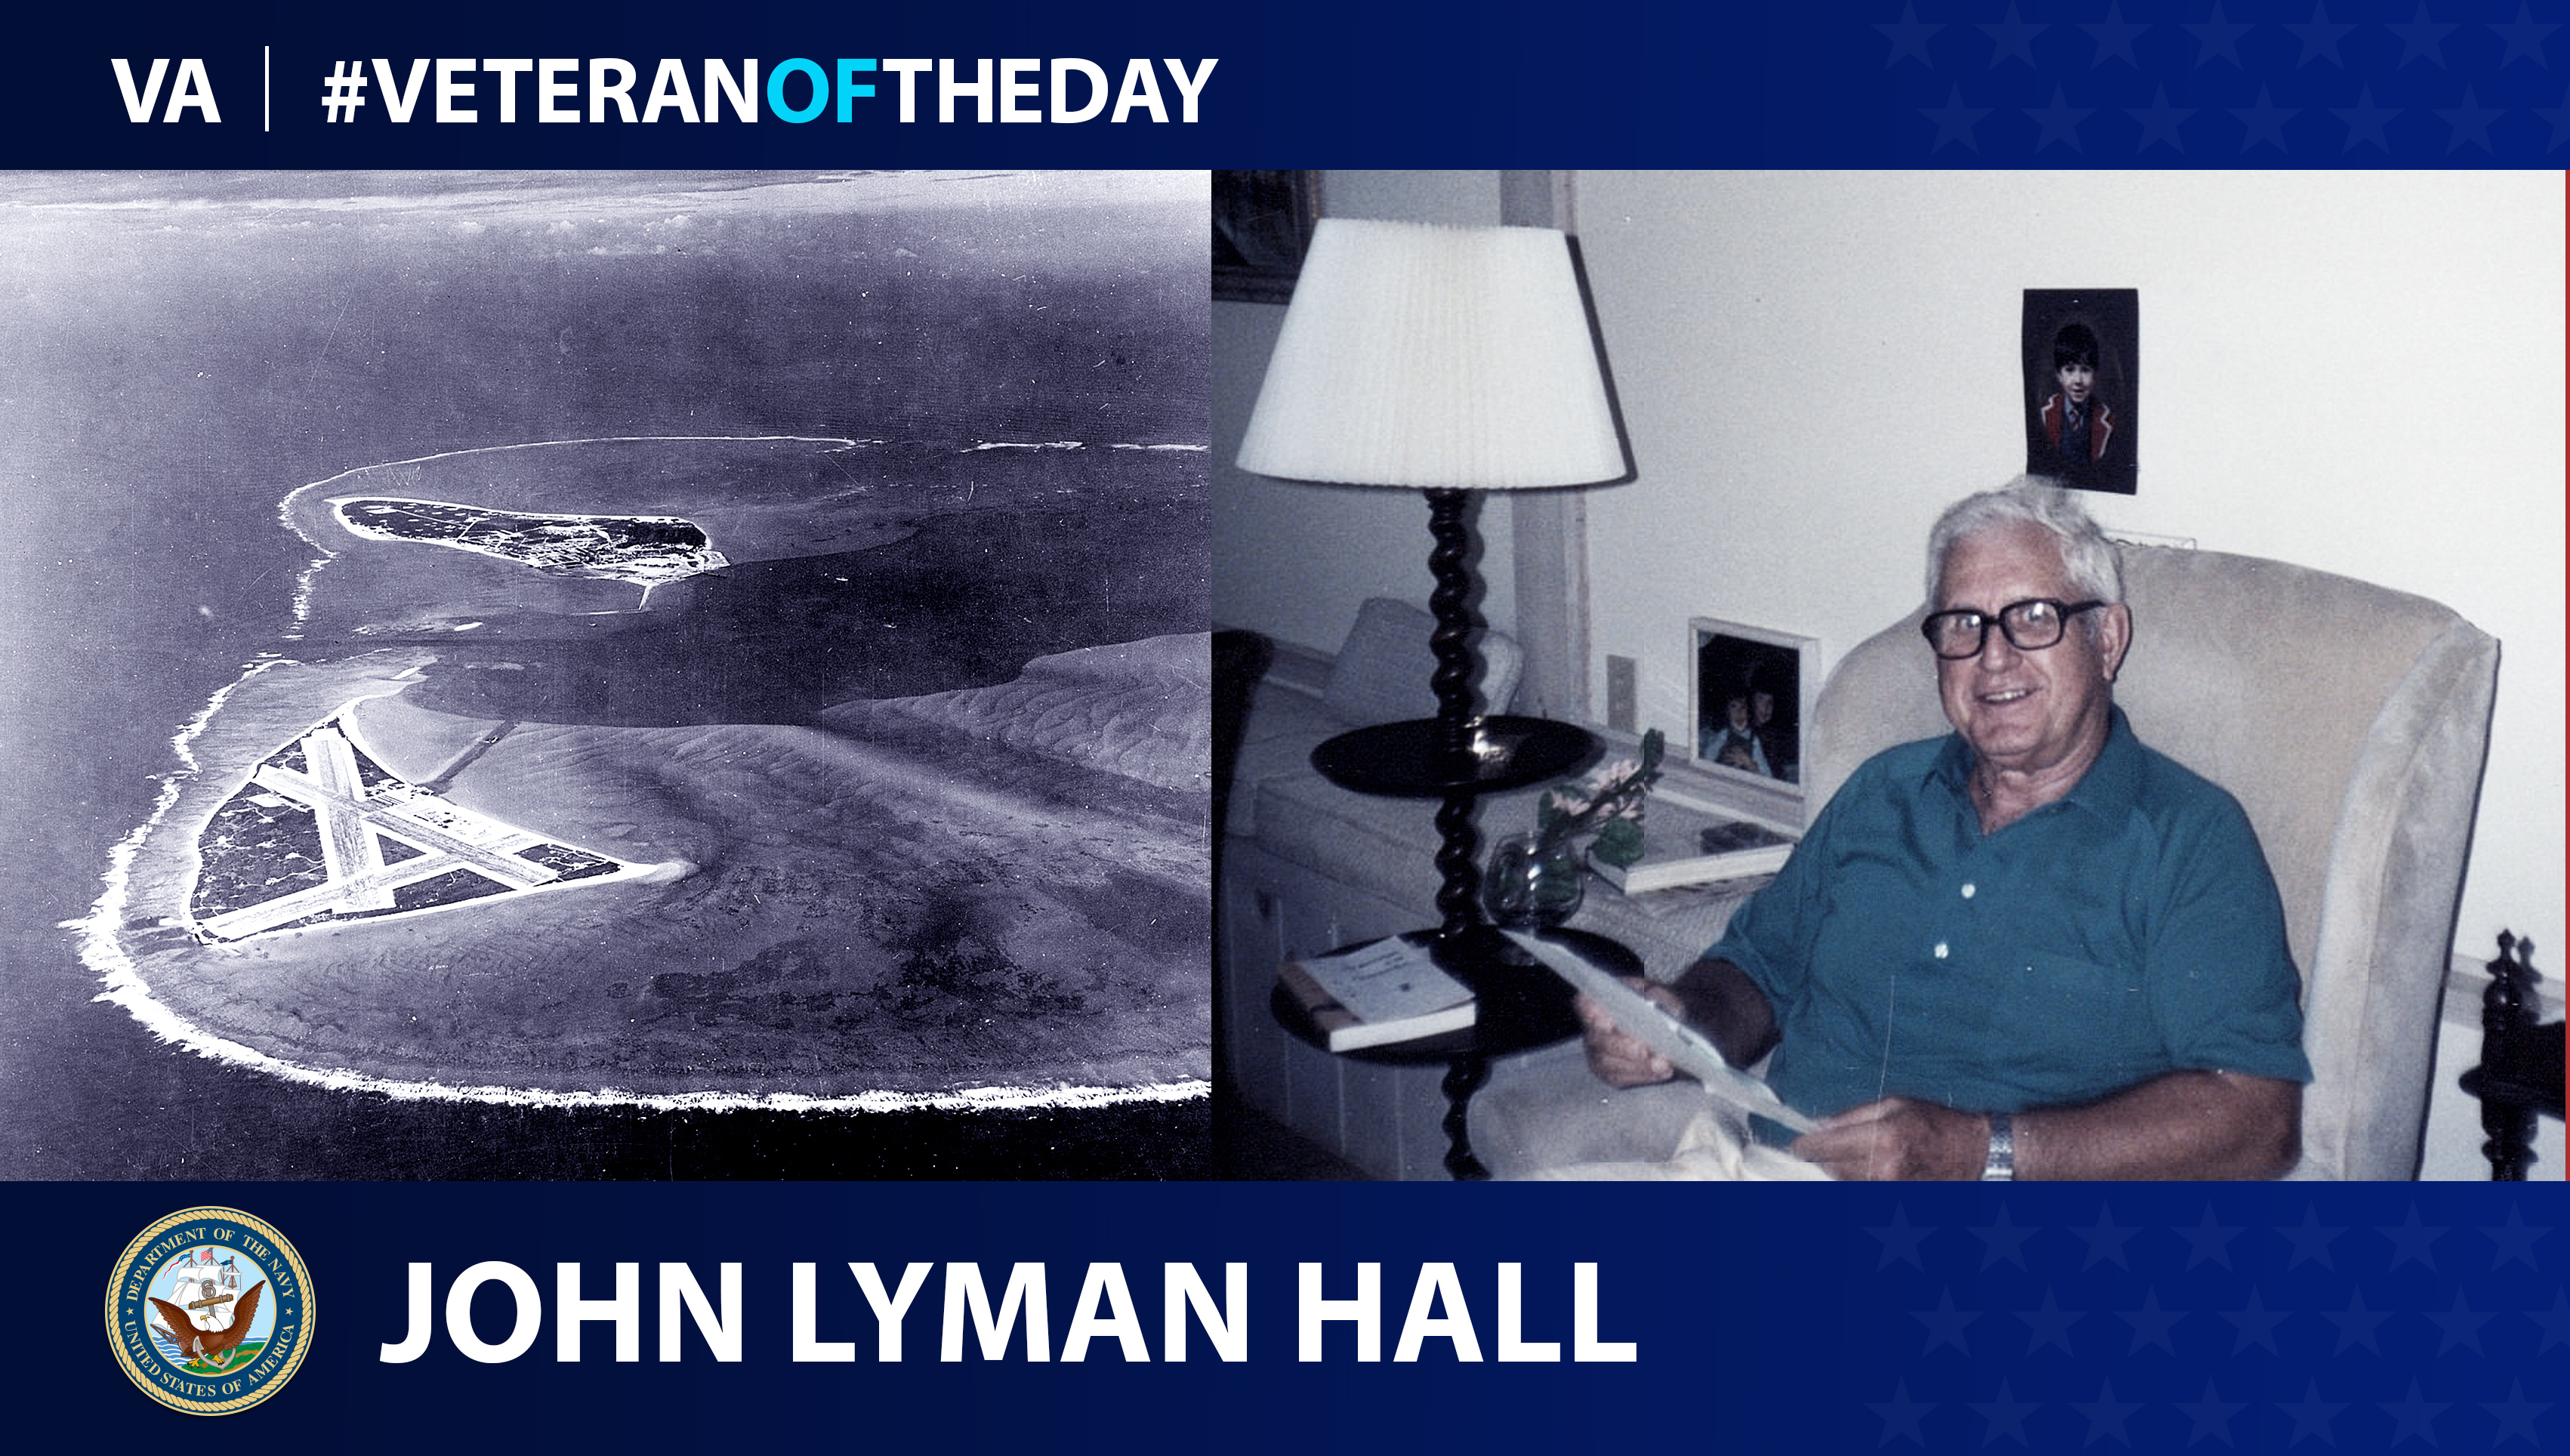 Navy Veteran John Lyman Hall is today's Veteran of the Day.